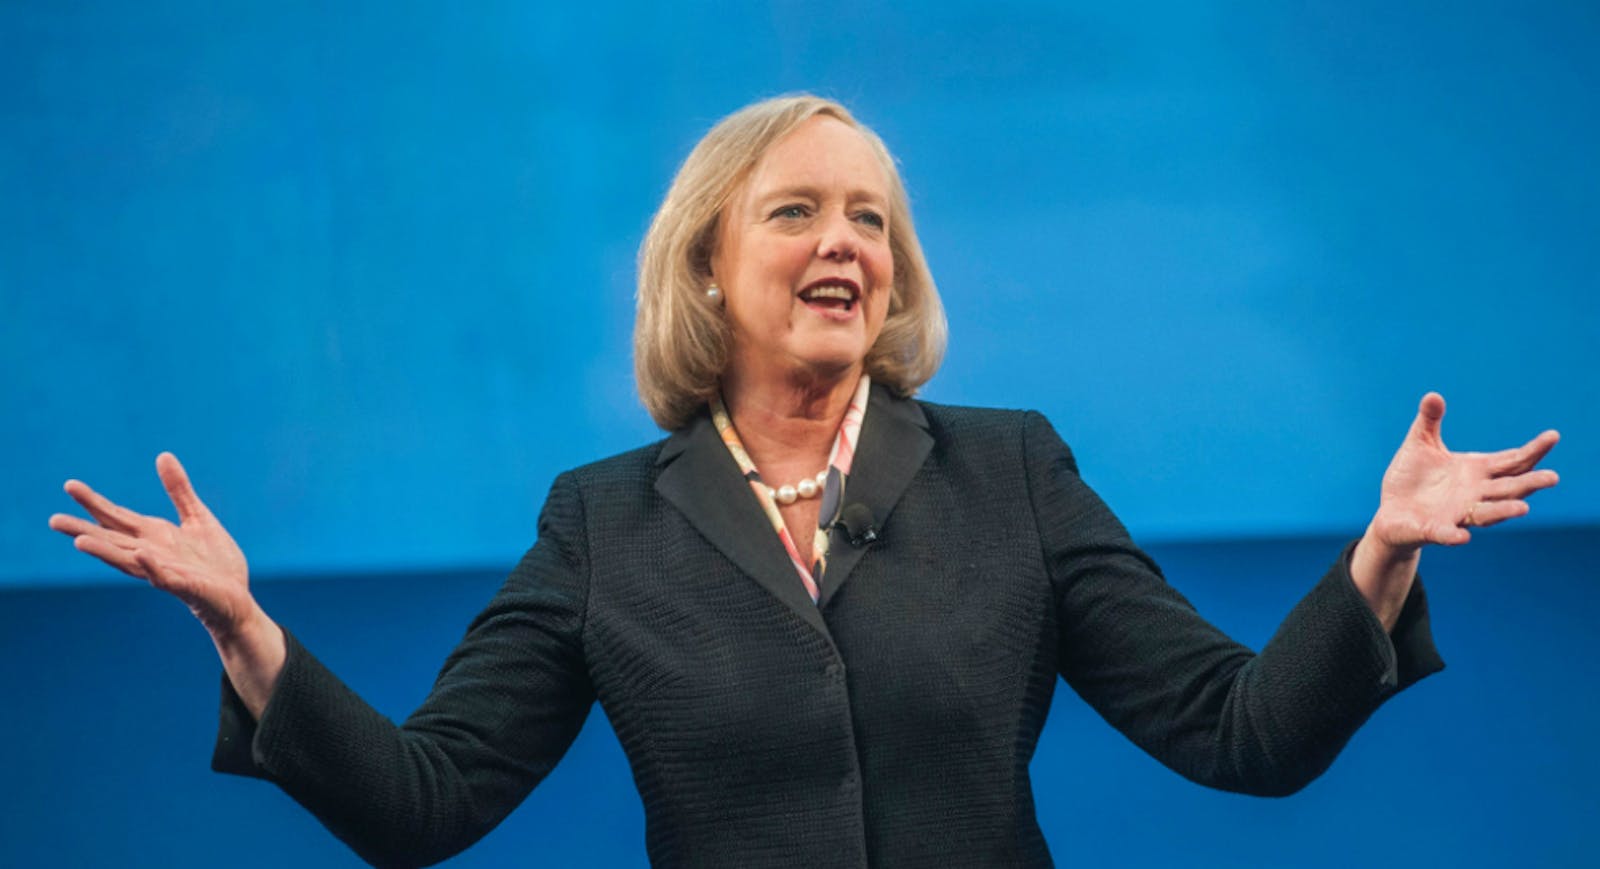 Hewlett-Packard CEO Meg Whitman. Photo by Bloomberg.